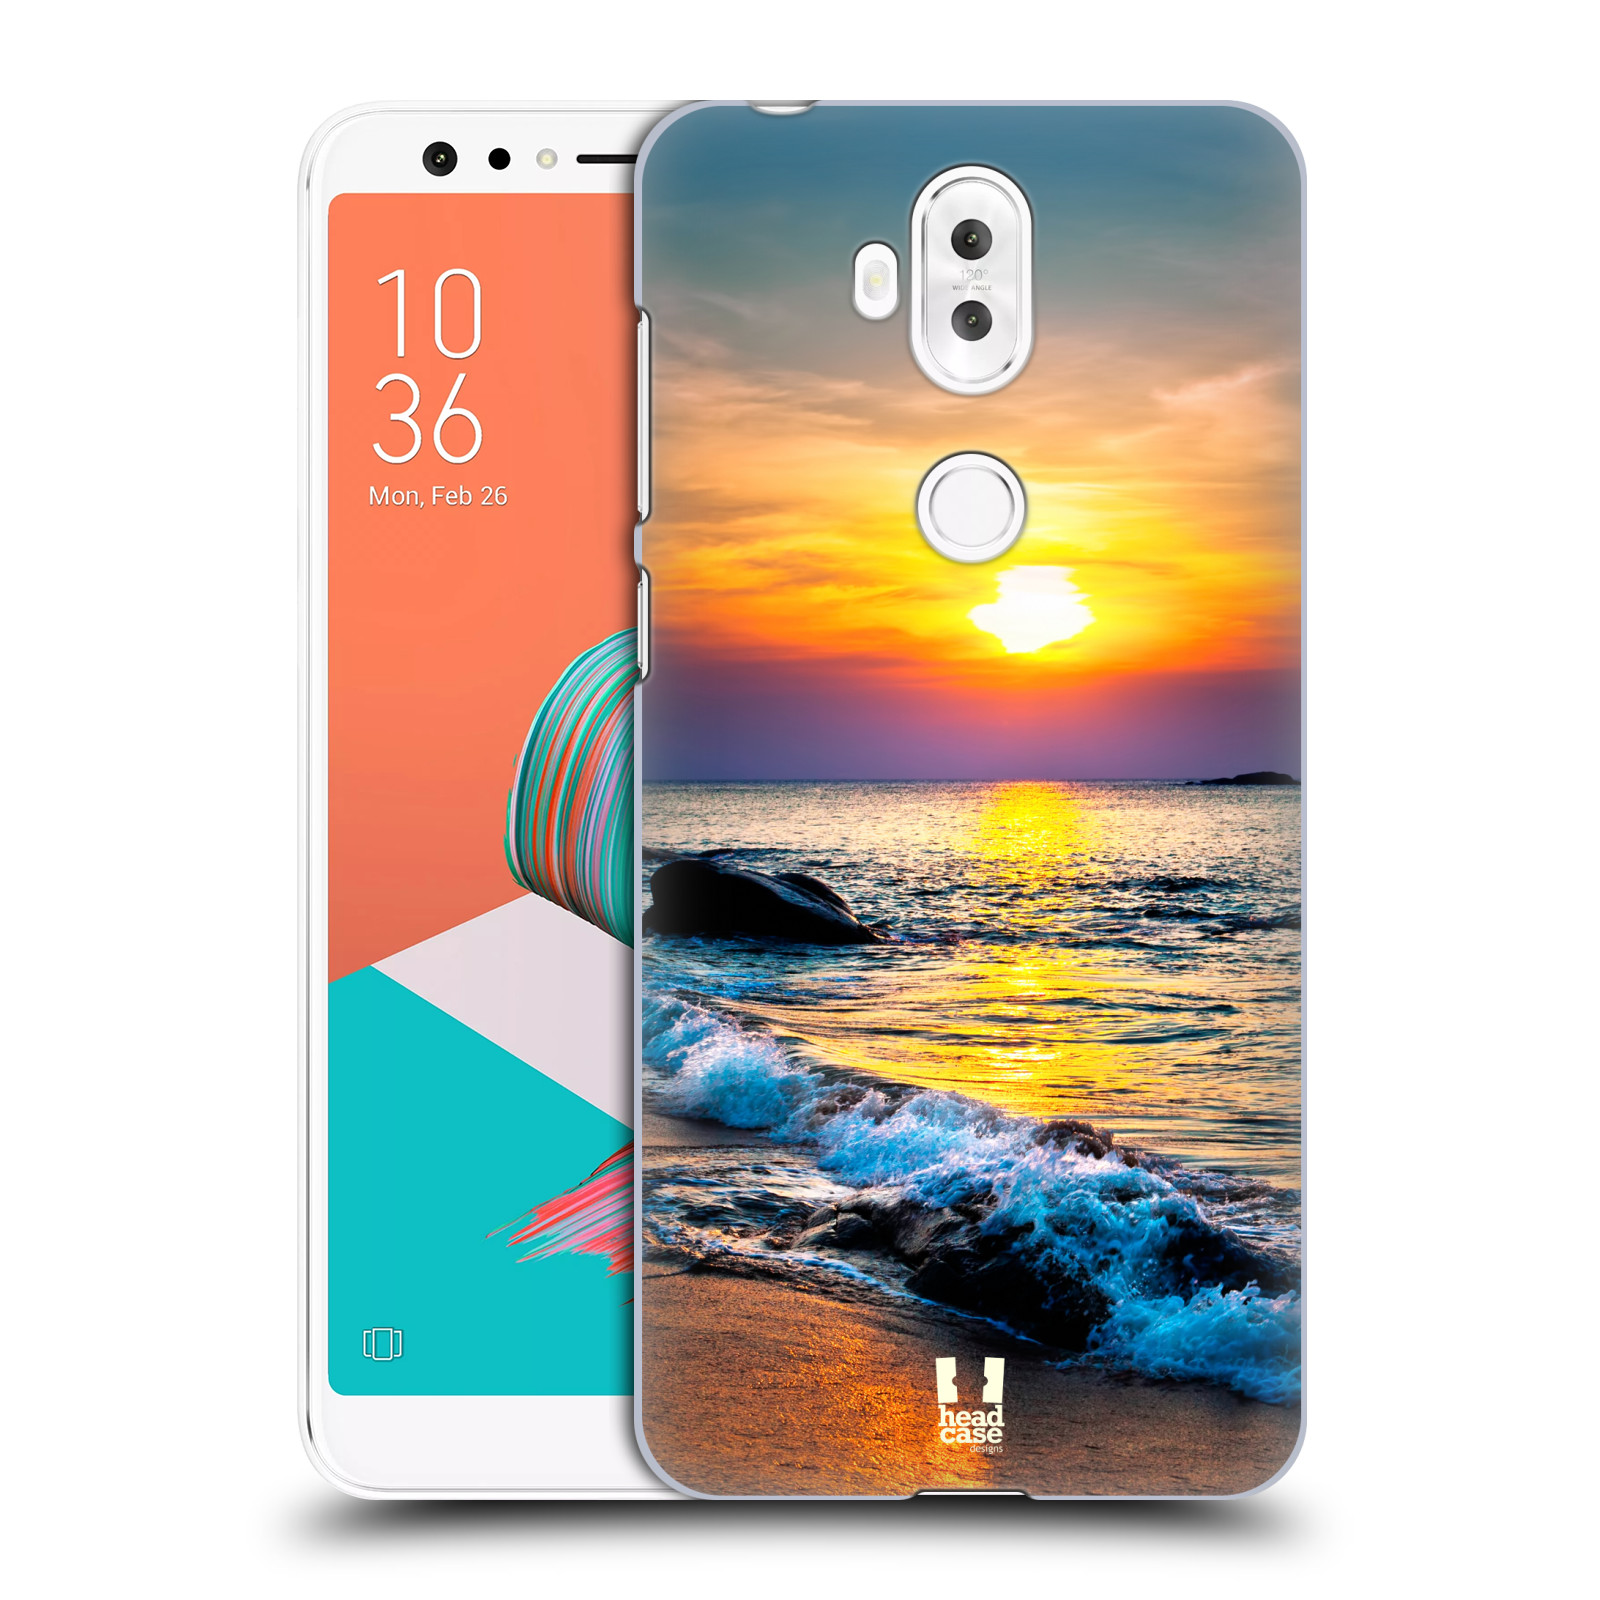 HEAD CASE plastový obal na mobil Asus Zenfone 5 LITE ZC600KL vzor Pláže a Moře barevný západ slunce